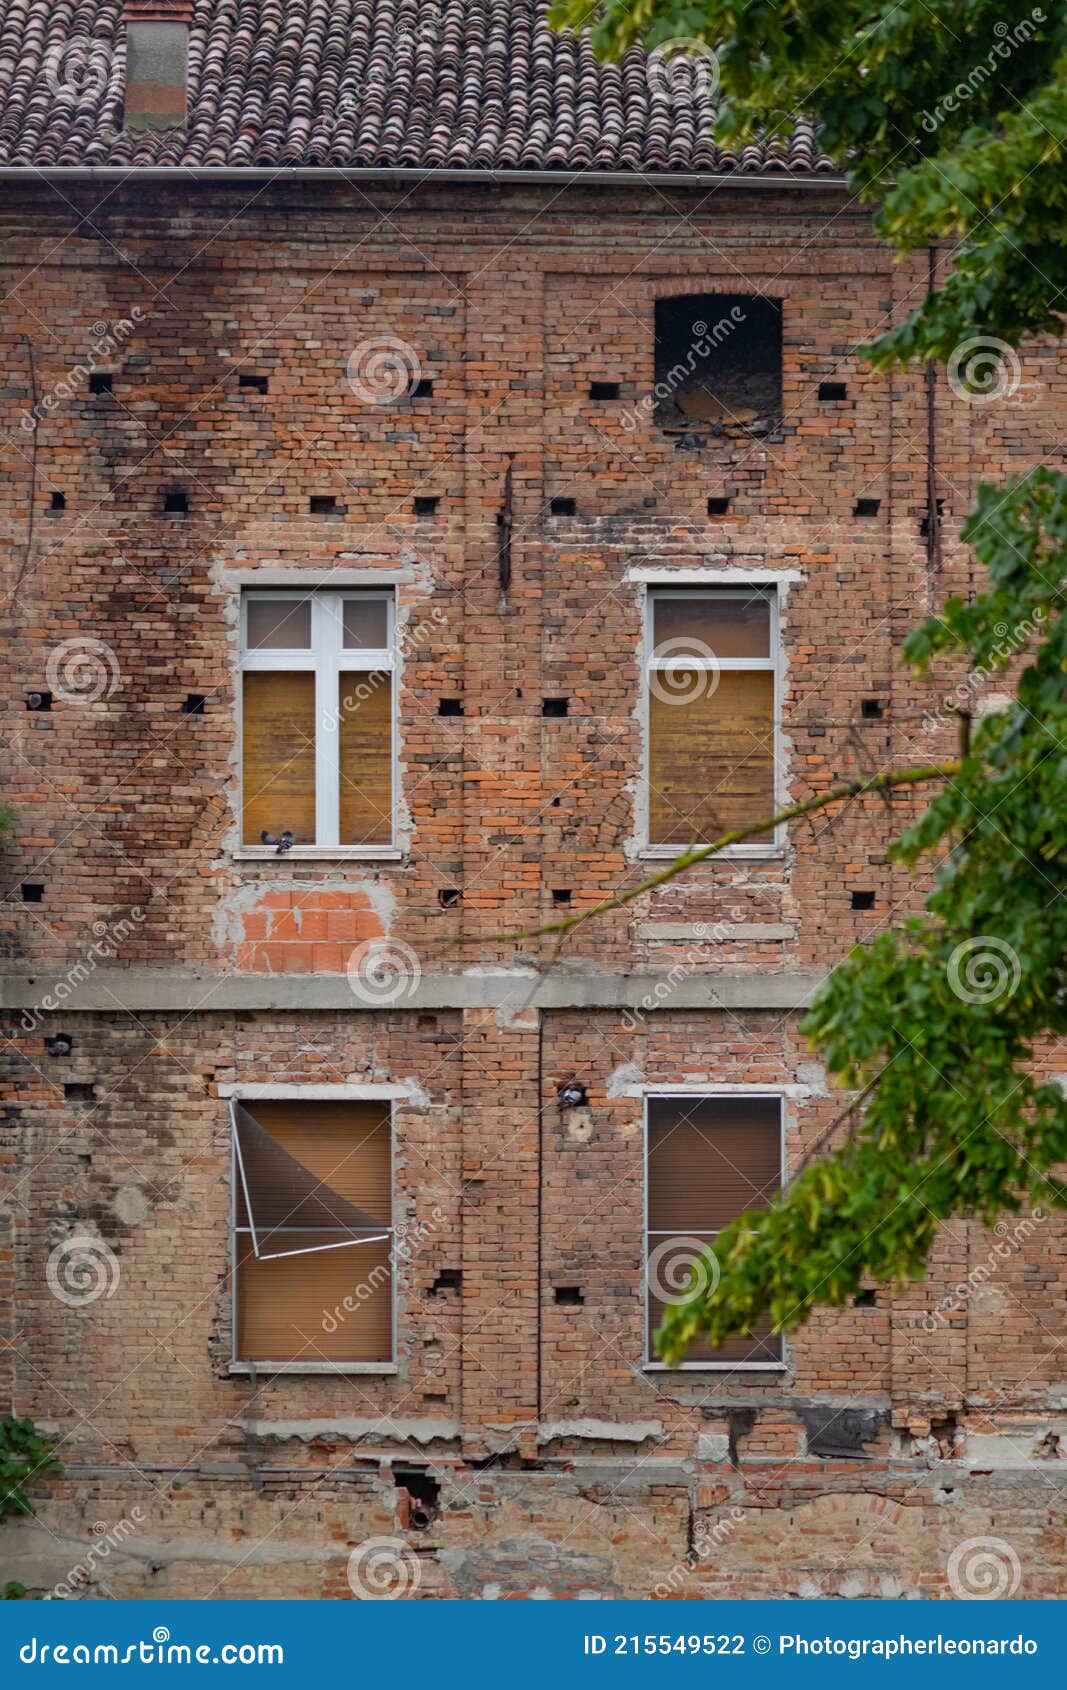 abandoned house with brick facades and closed windows. casalmaggiore, lombardia, italia